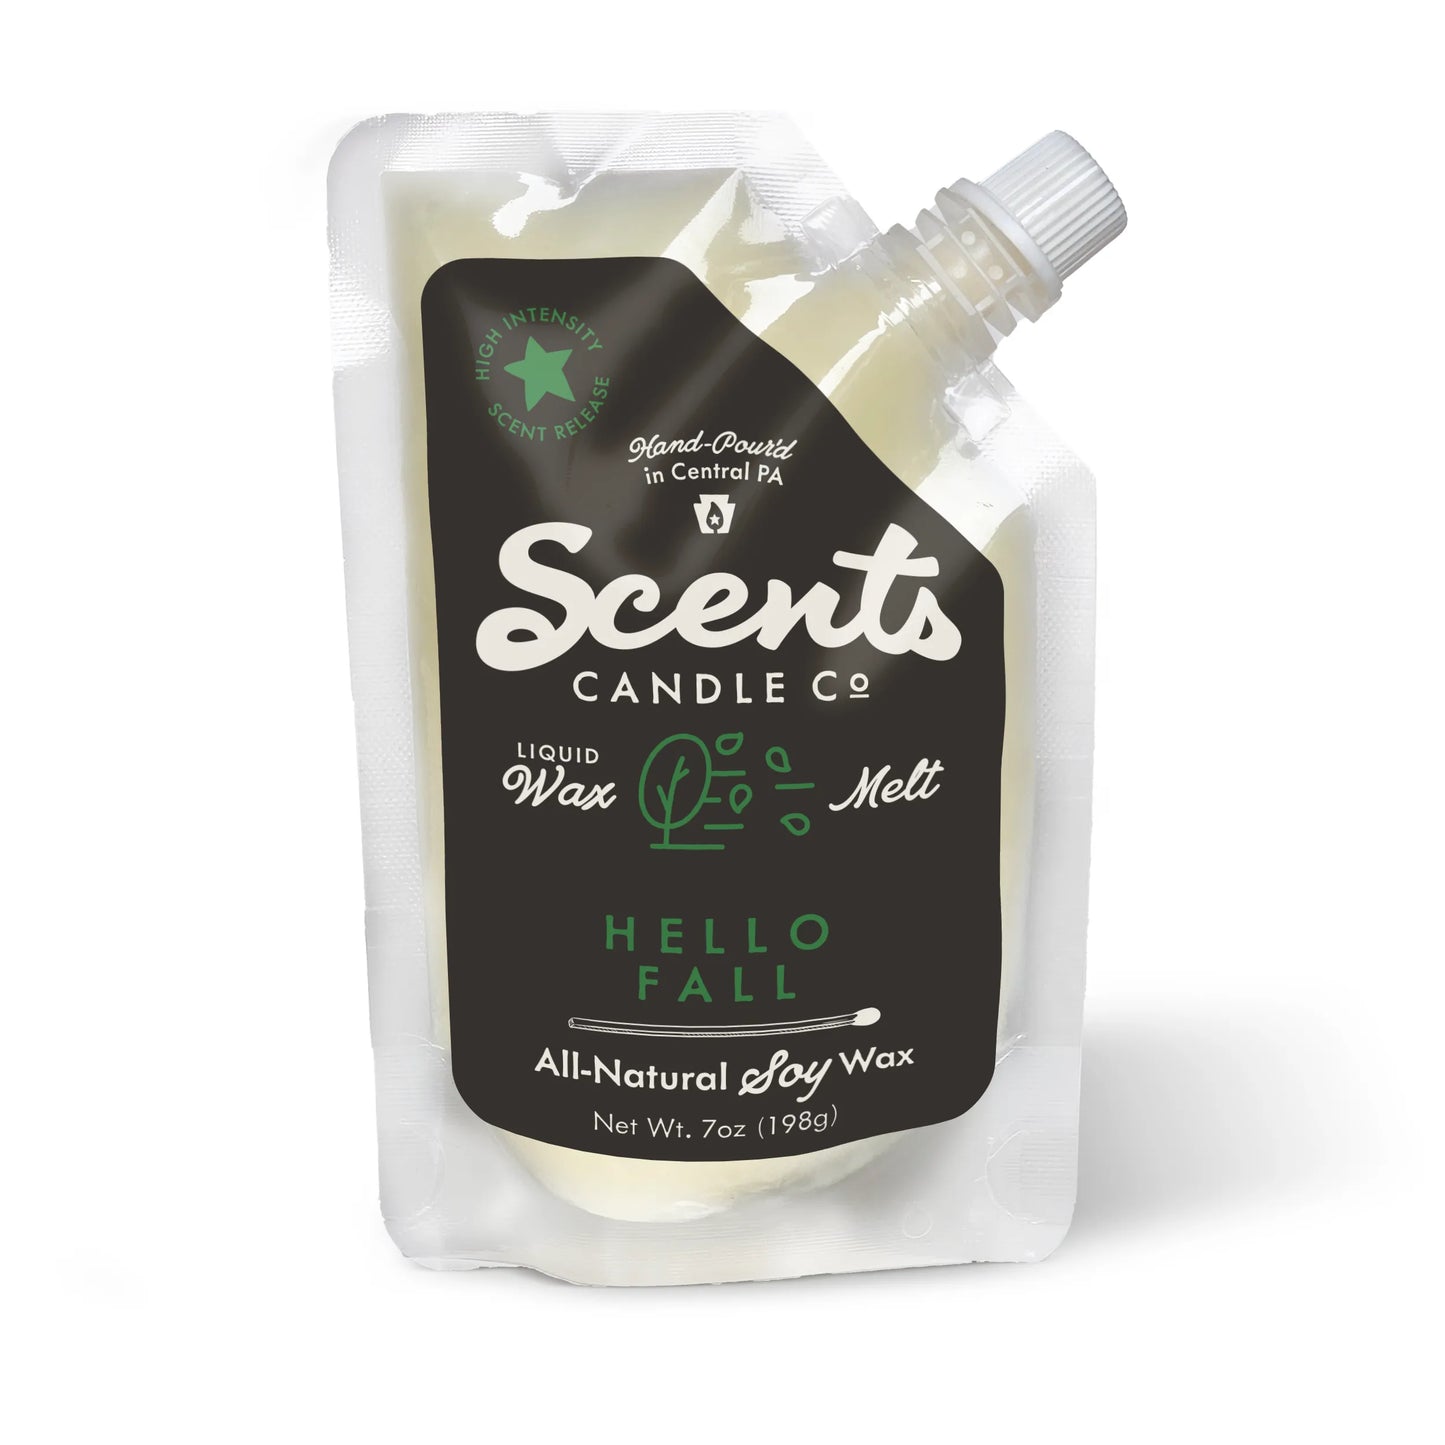 Scents Candle Co. Hello Fall Liquid Wax Melt